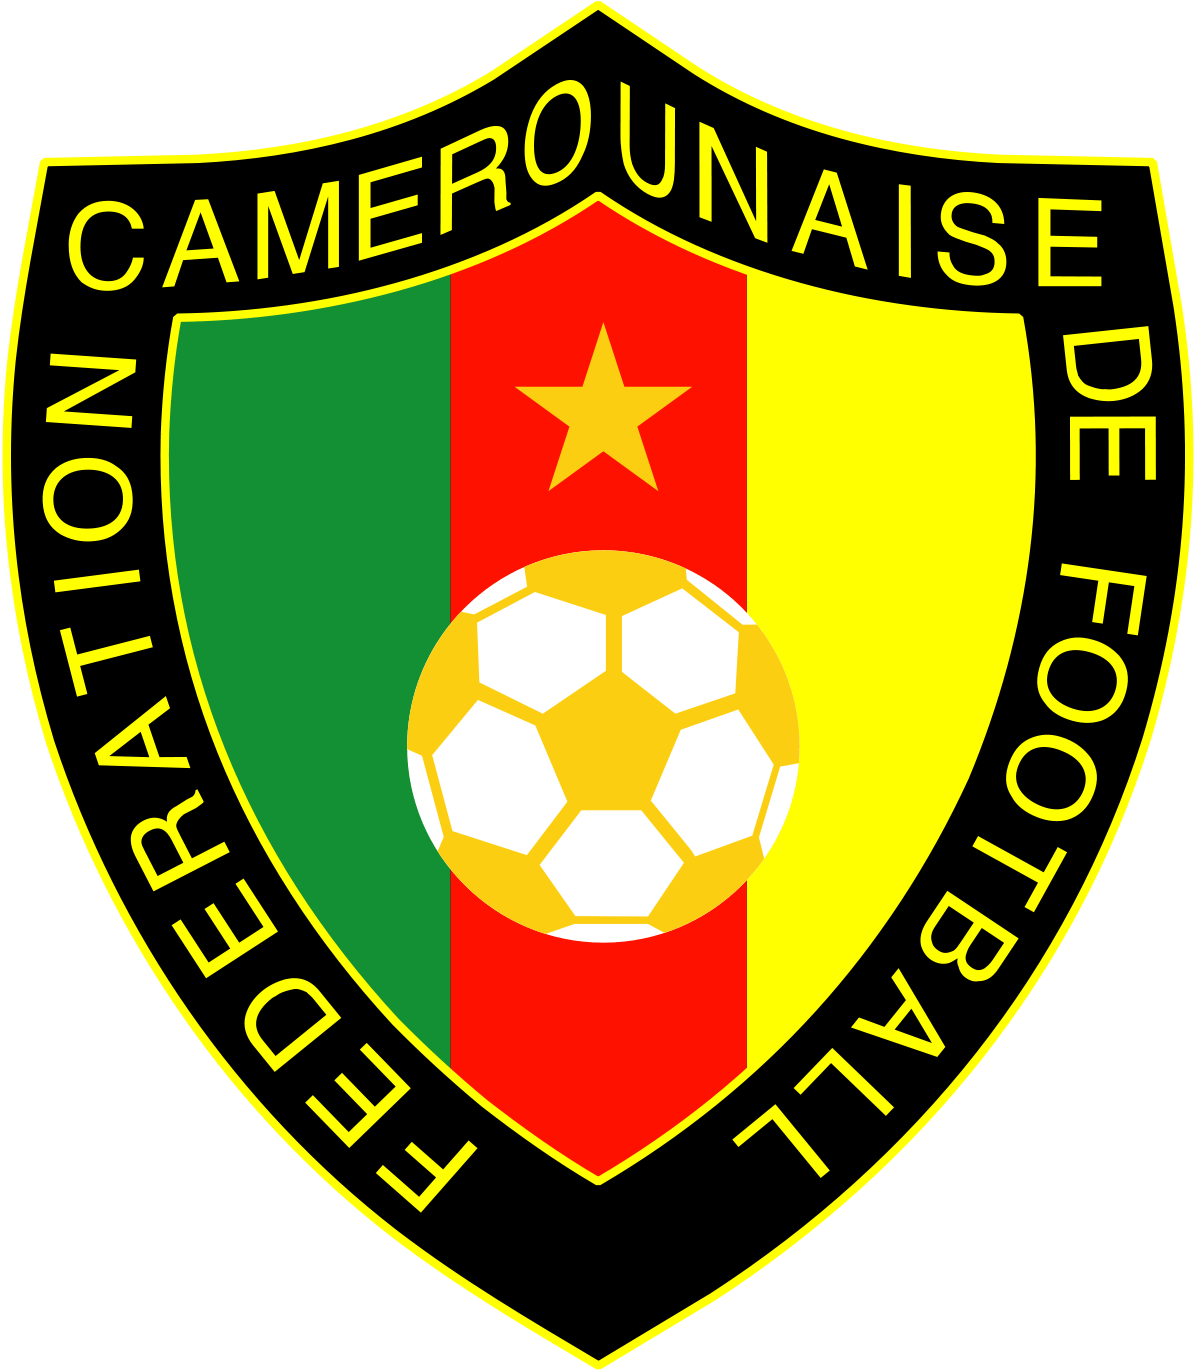 Federation Camerounaise De Football (1200x1376)